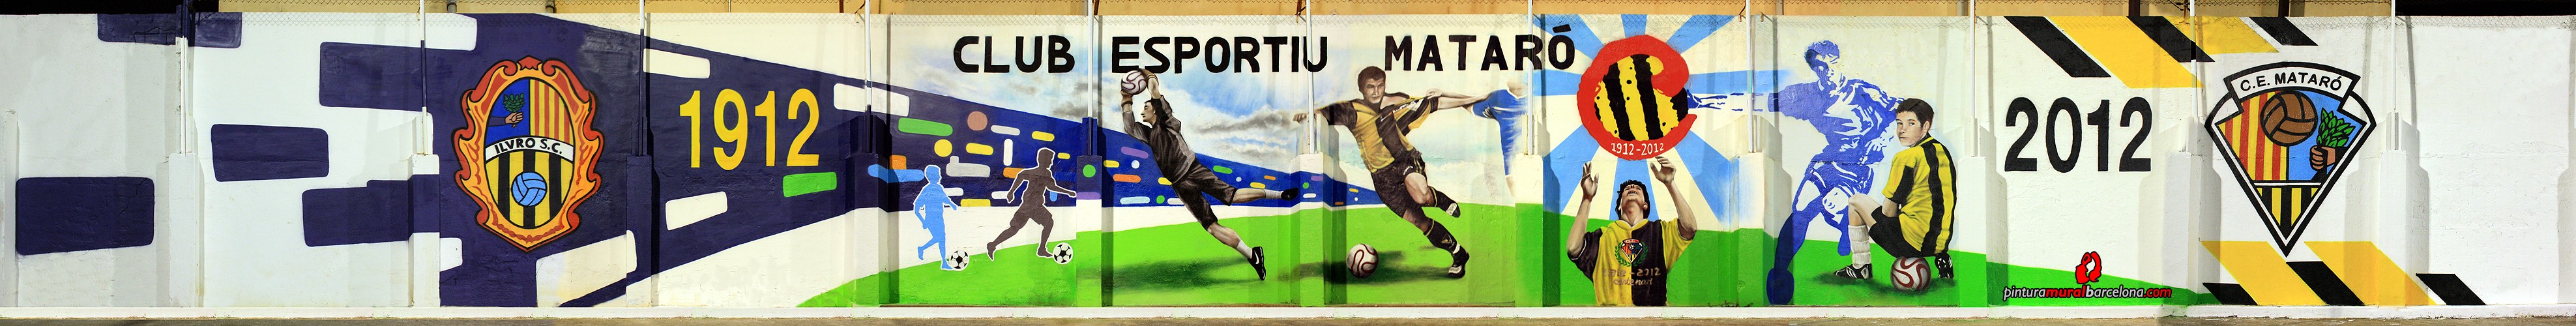 CLUB ESPORTIU MATARÓ, 30 x 4 m. Mataró (Spain).  ©2013 [Espray]